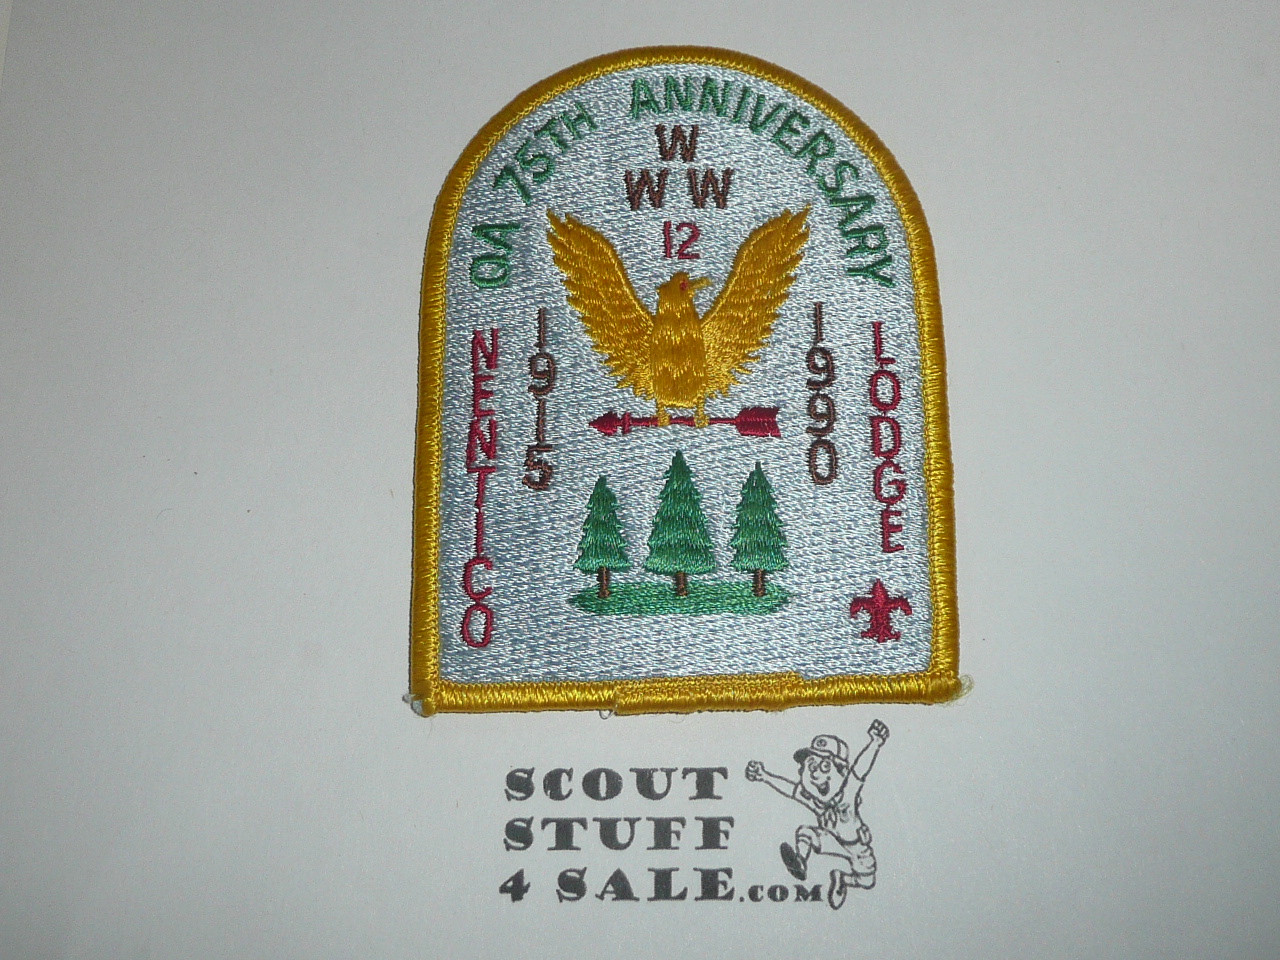 Order of the Arrow Lodge #12 Nentico x9 OA 75th Anniversary Patch